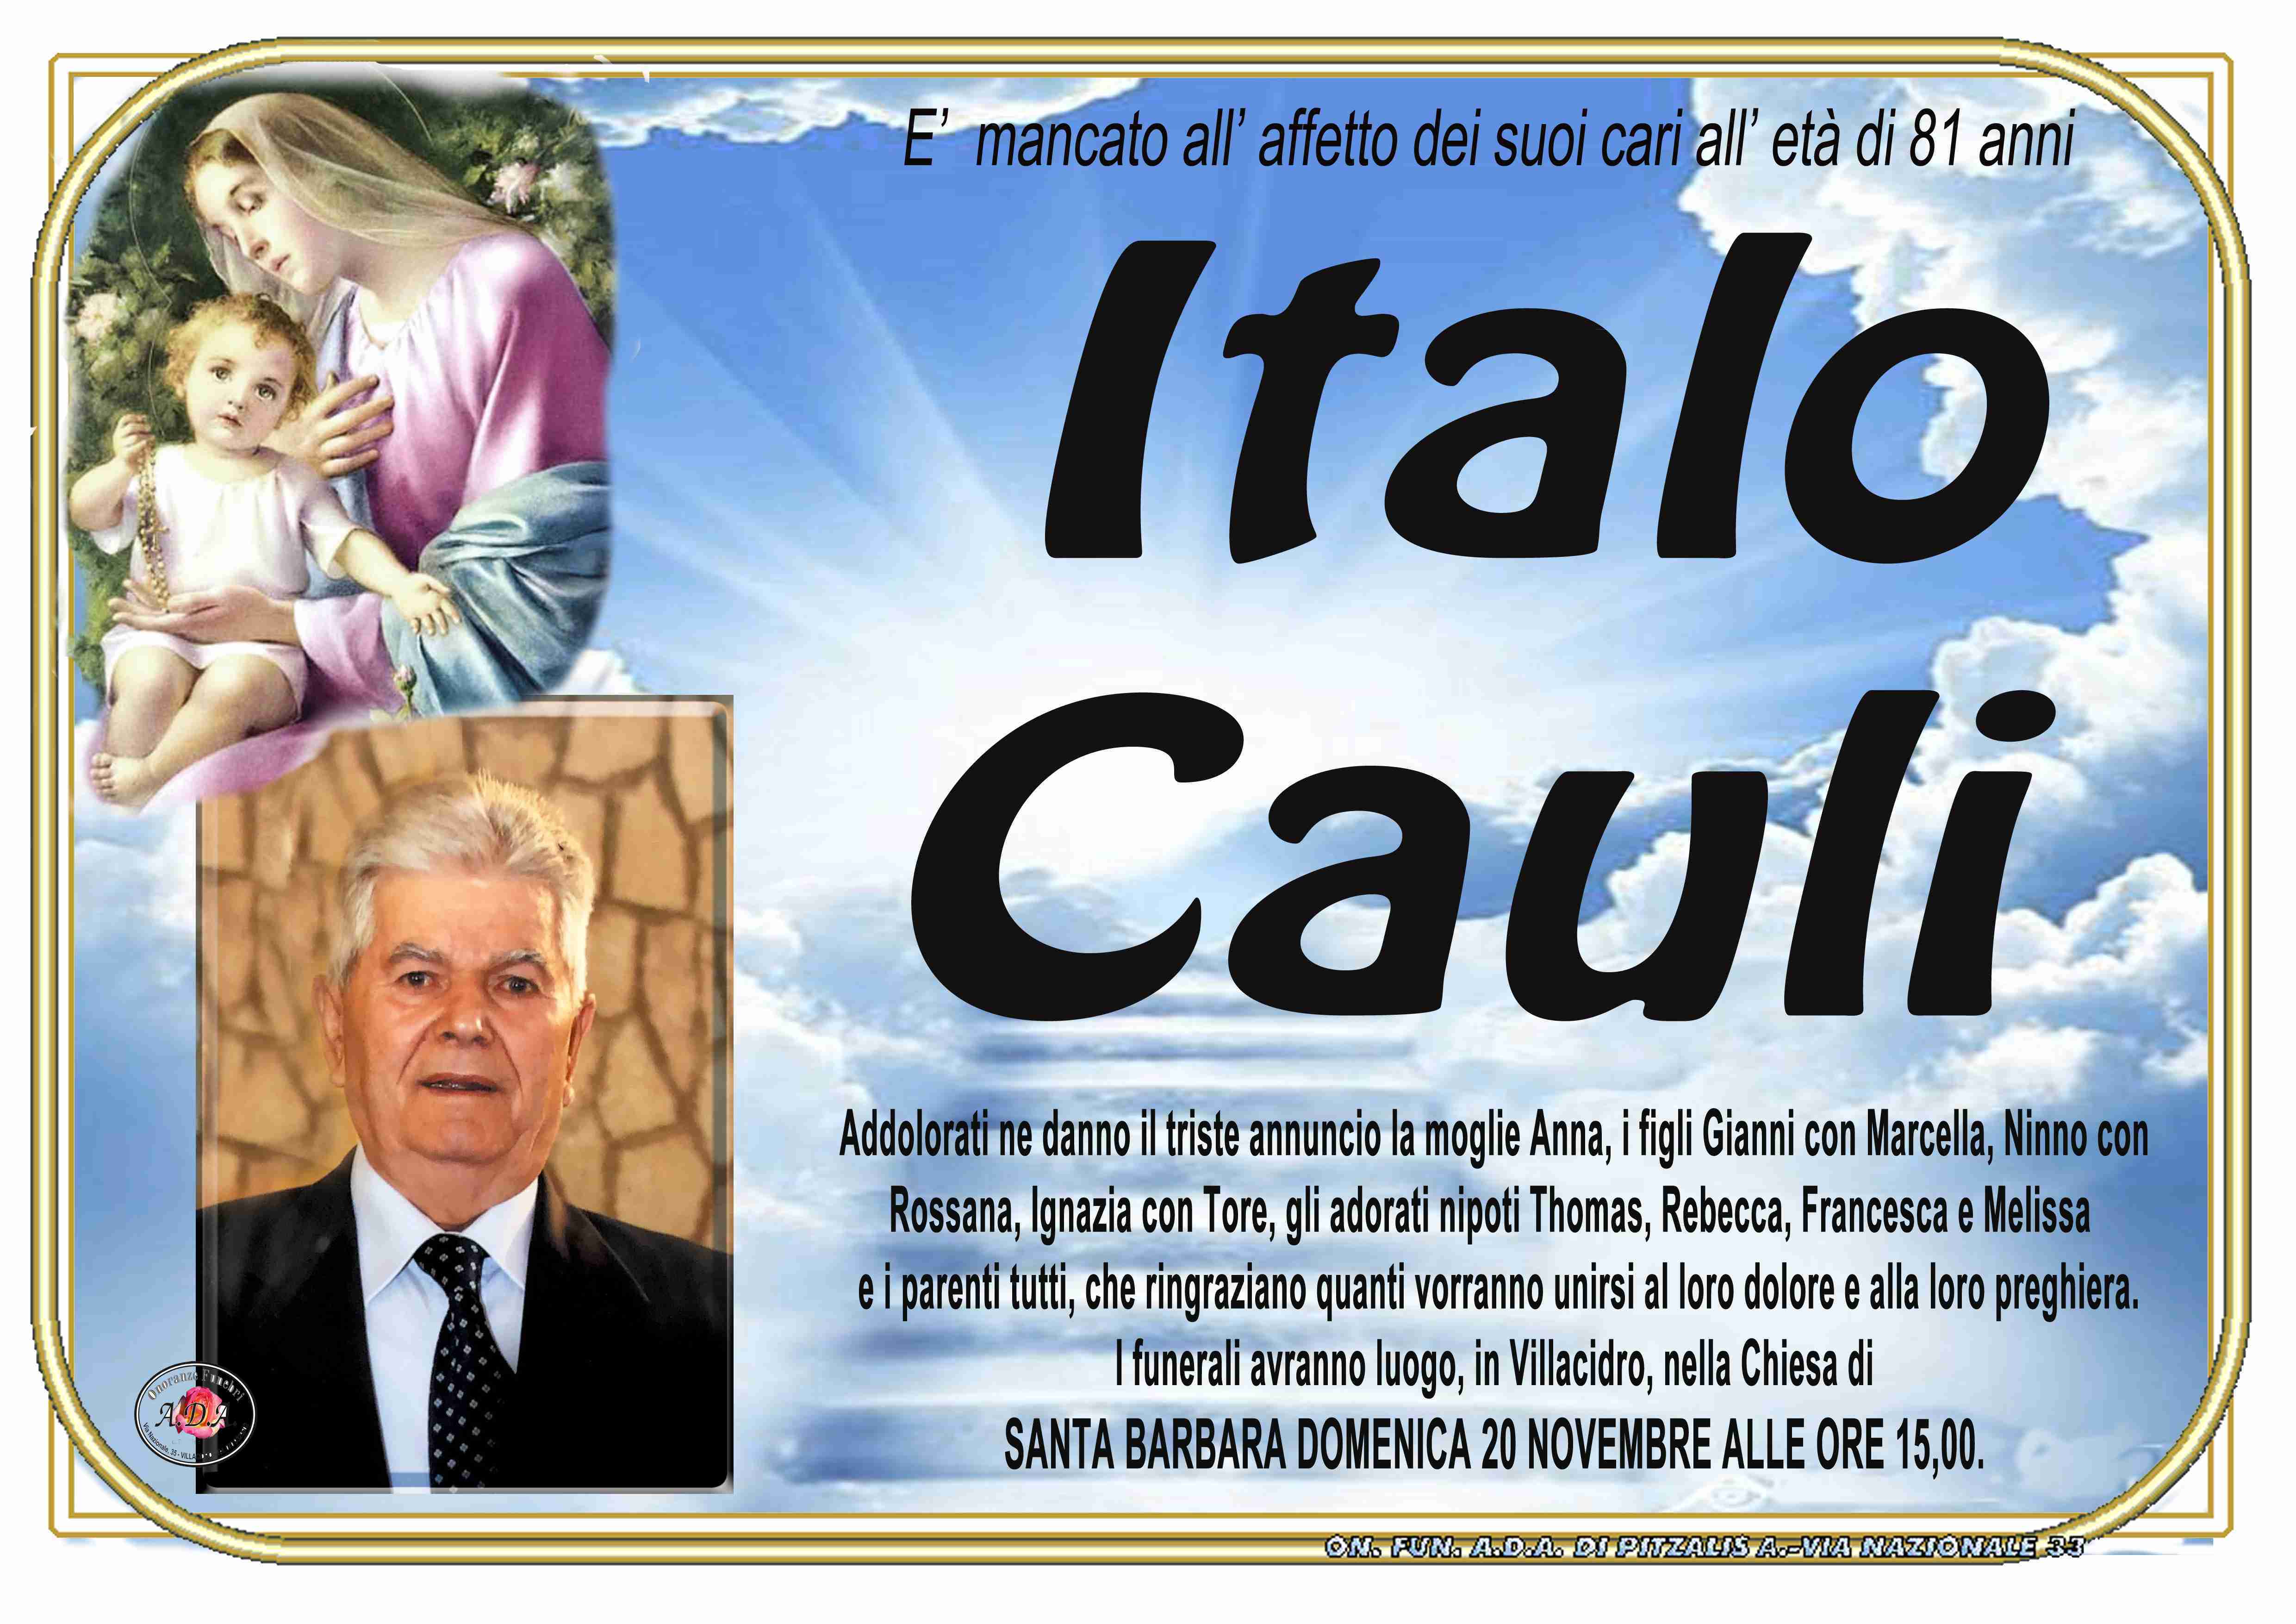 Italo Cauli